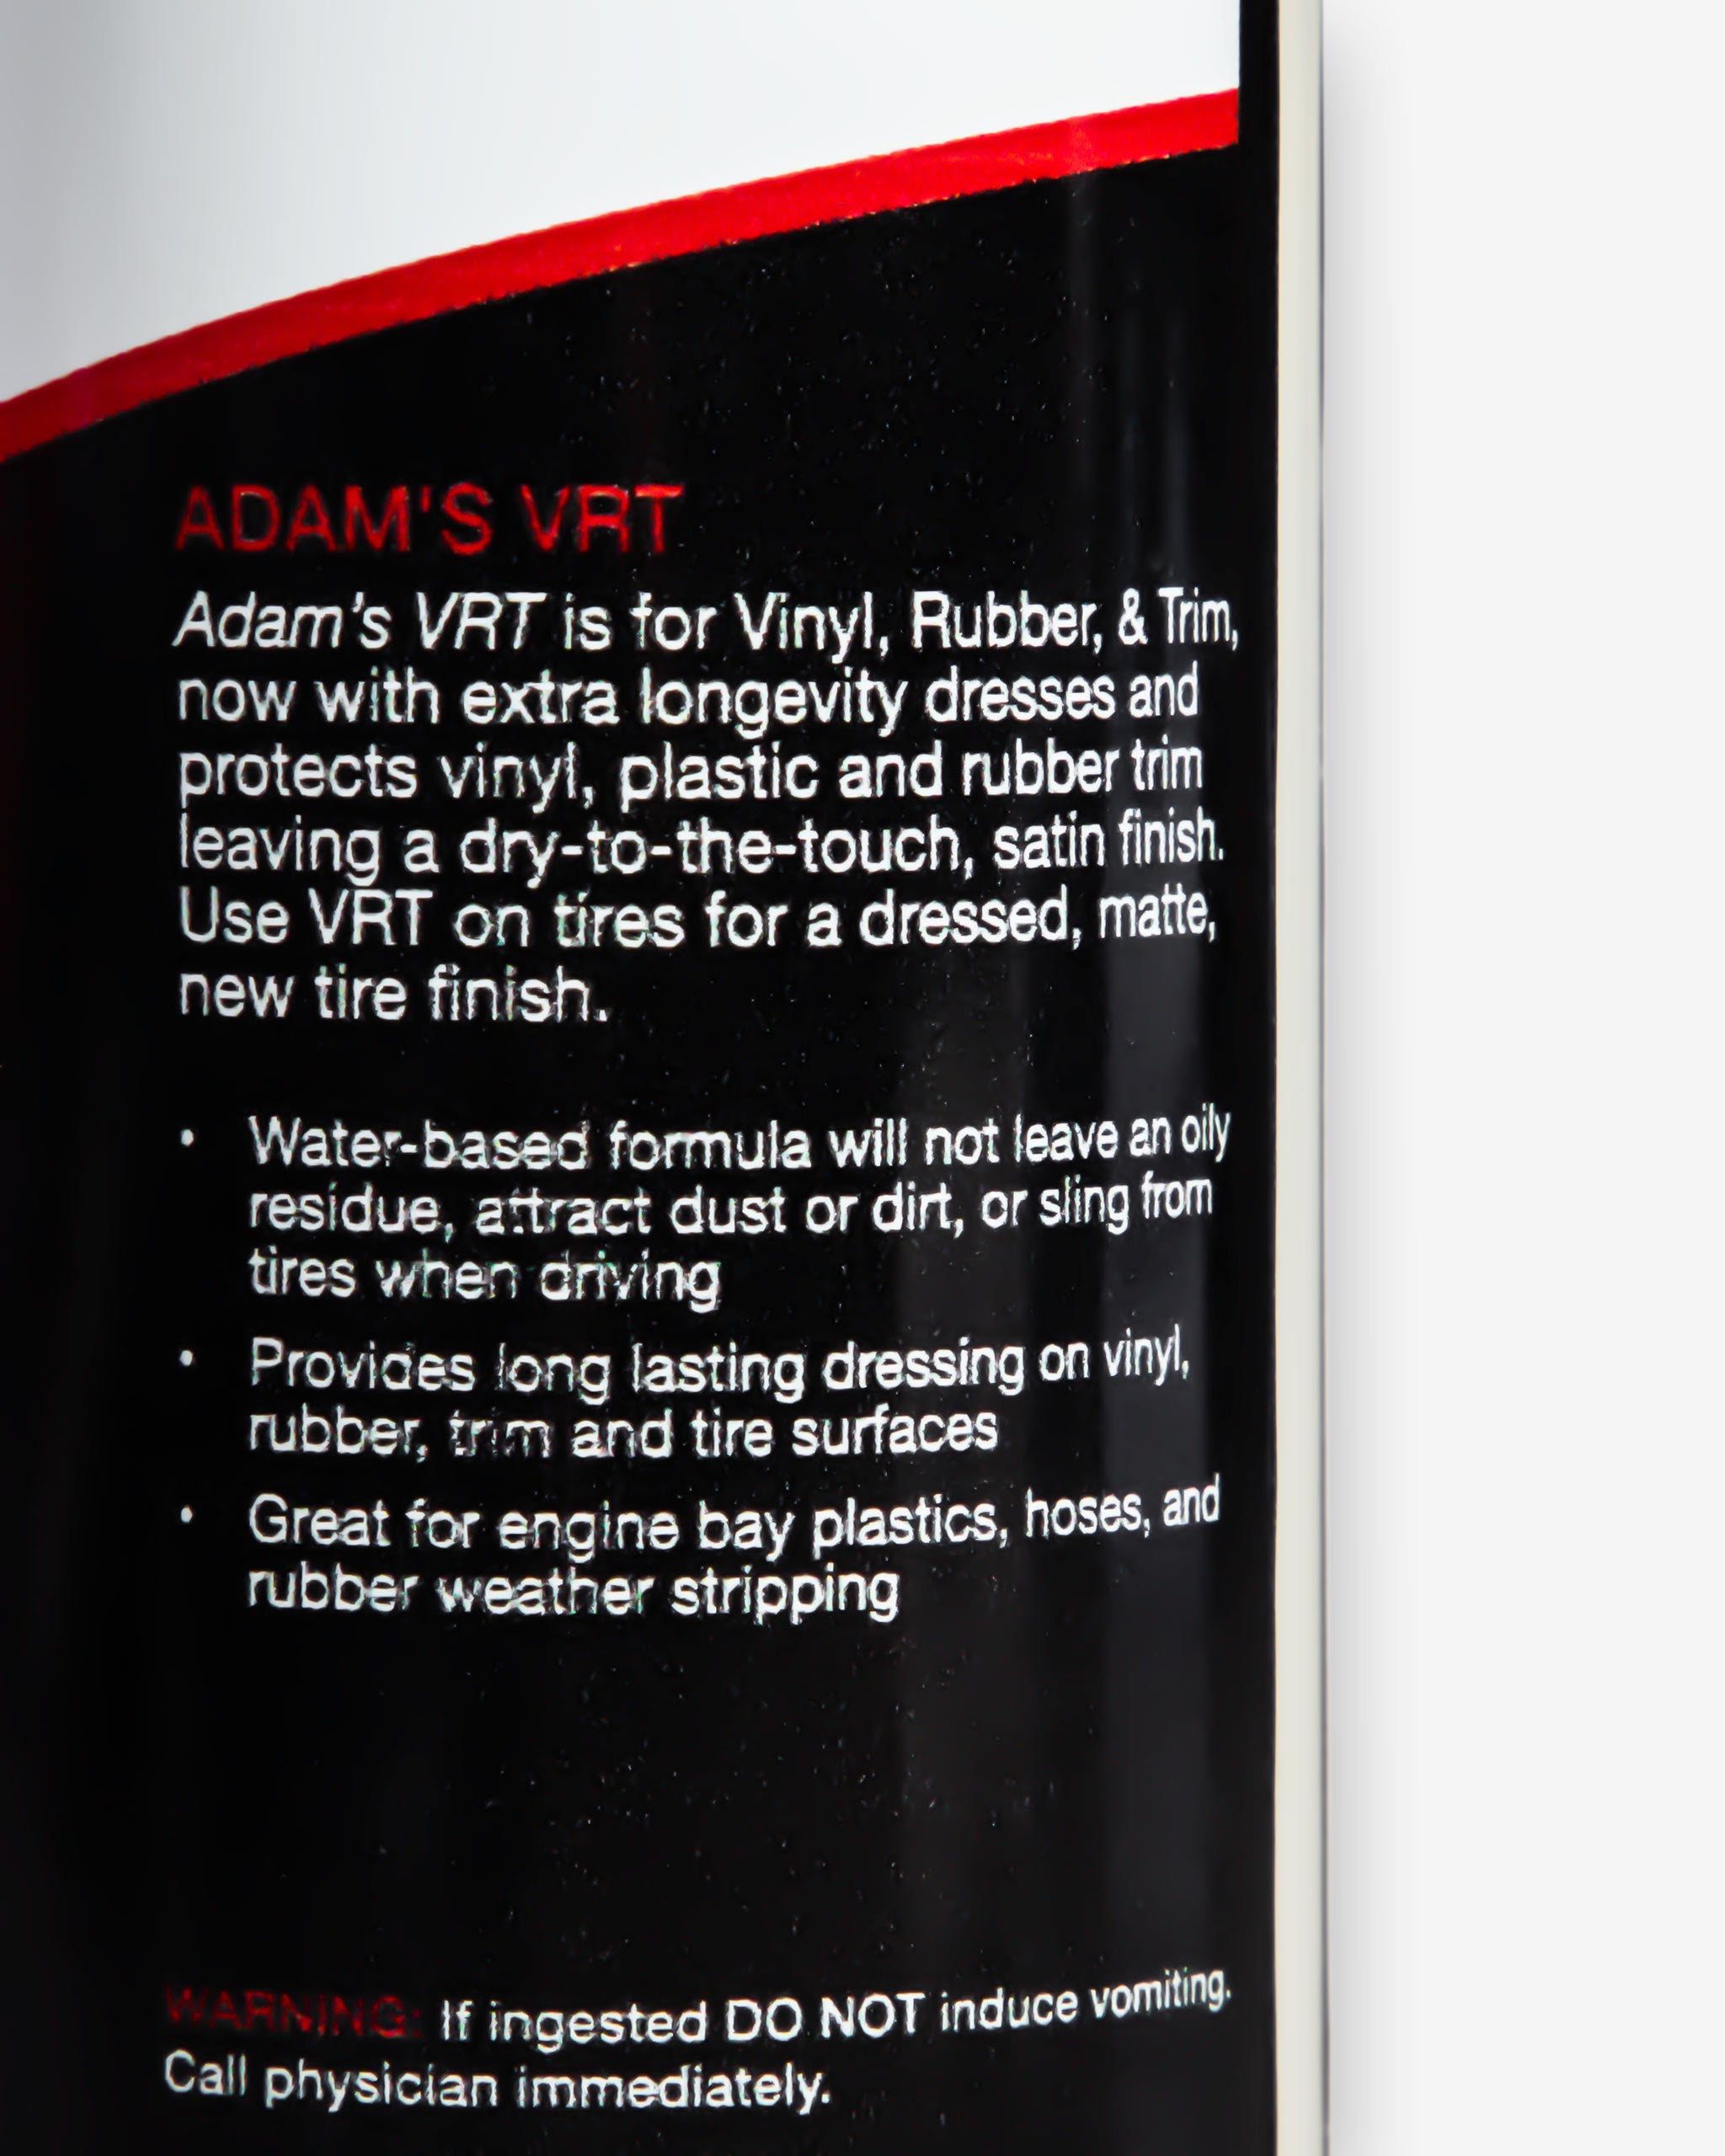 Adam's VRT Tire & Trim Dressing